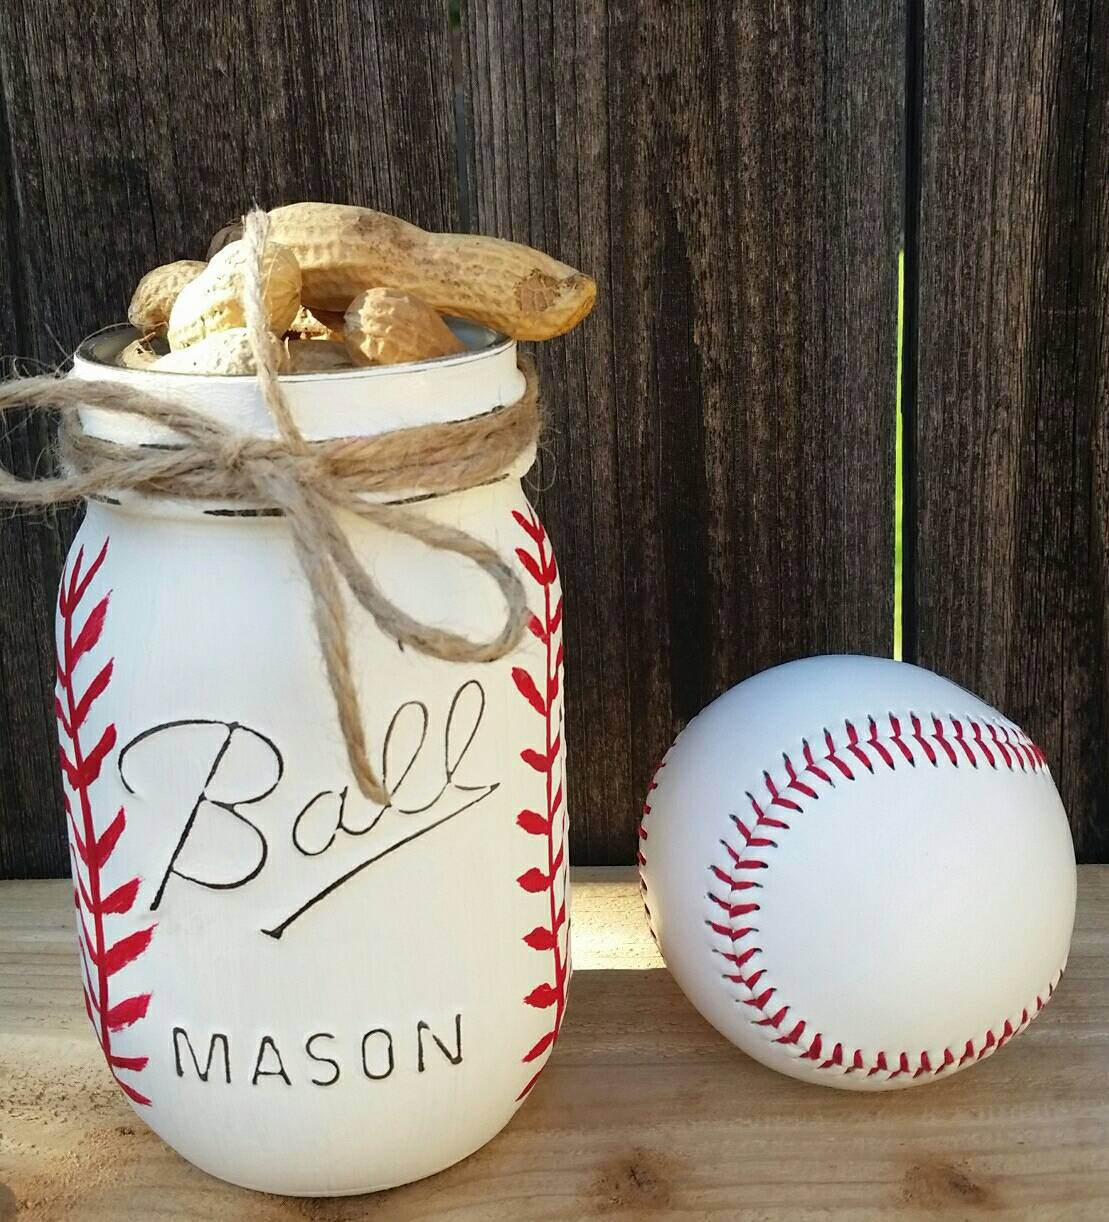 Best ideas about Baseball Gift Ideas
. Save or Pin Hand Painted Baseball Mason Jar Teacher Gift Baseball Coach Now.